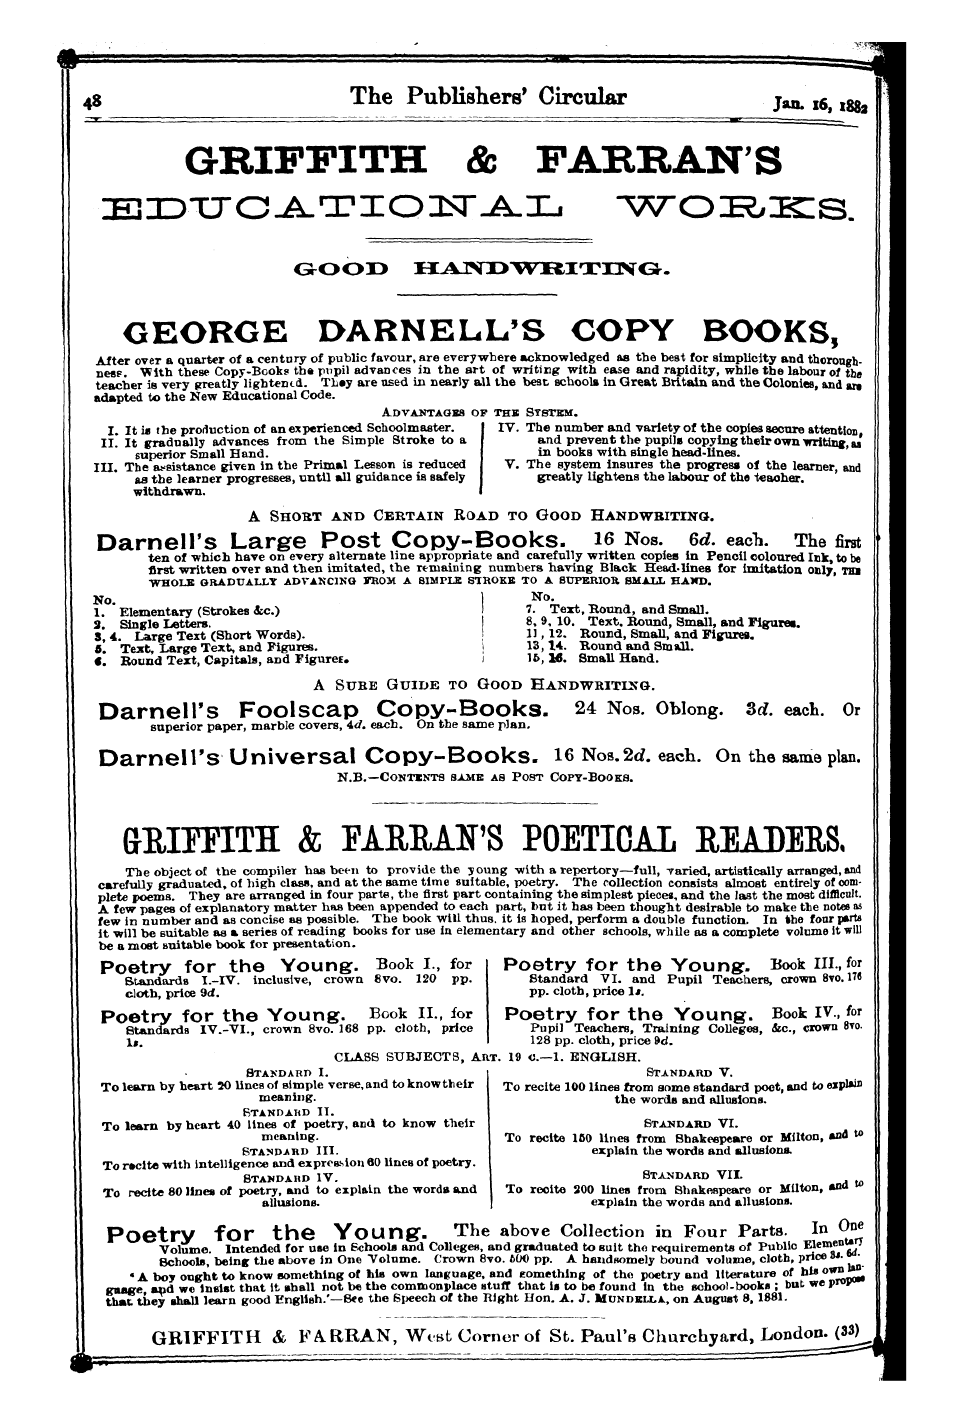 Publishers’ Circular (1880-1890): jS F Y, 1st edition: 48